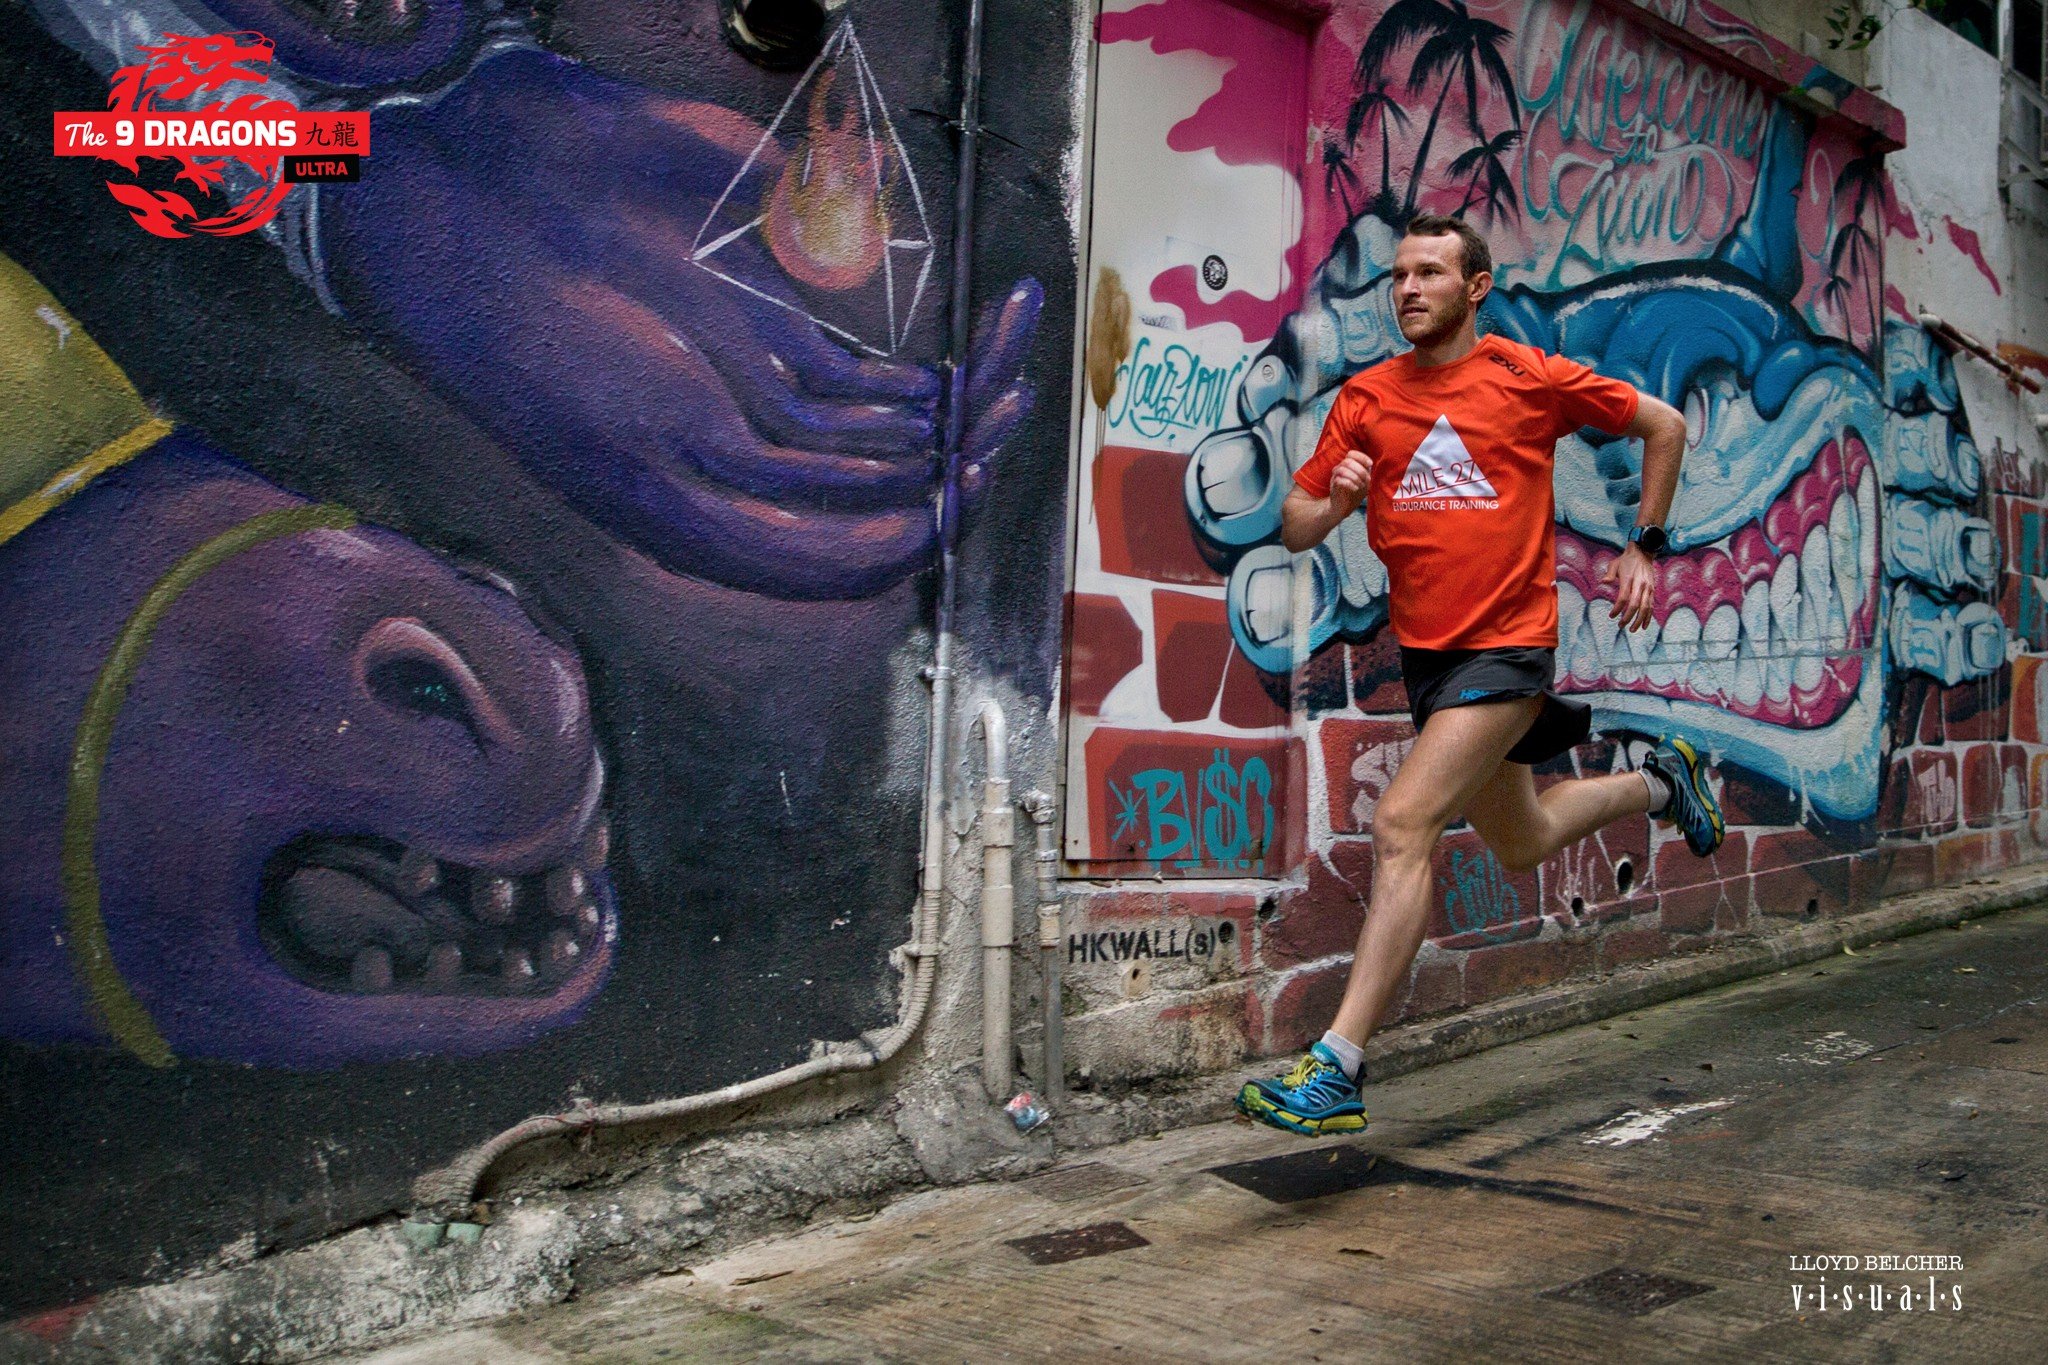 Ben Duffus is running his first ultra marathon in over a year. Photos: Lloyd Belcher